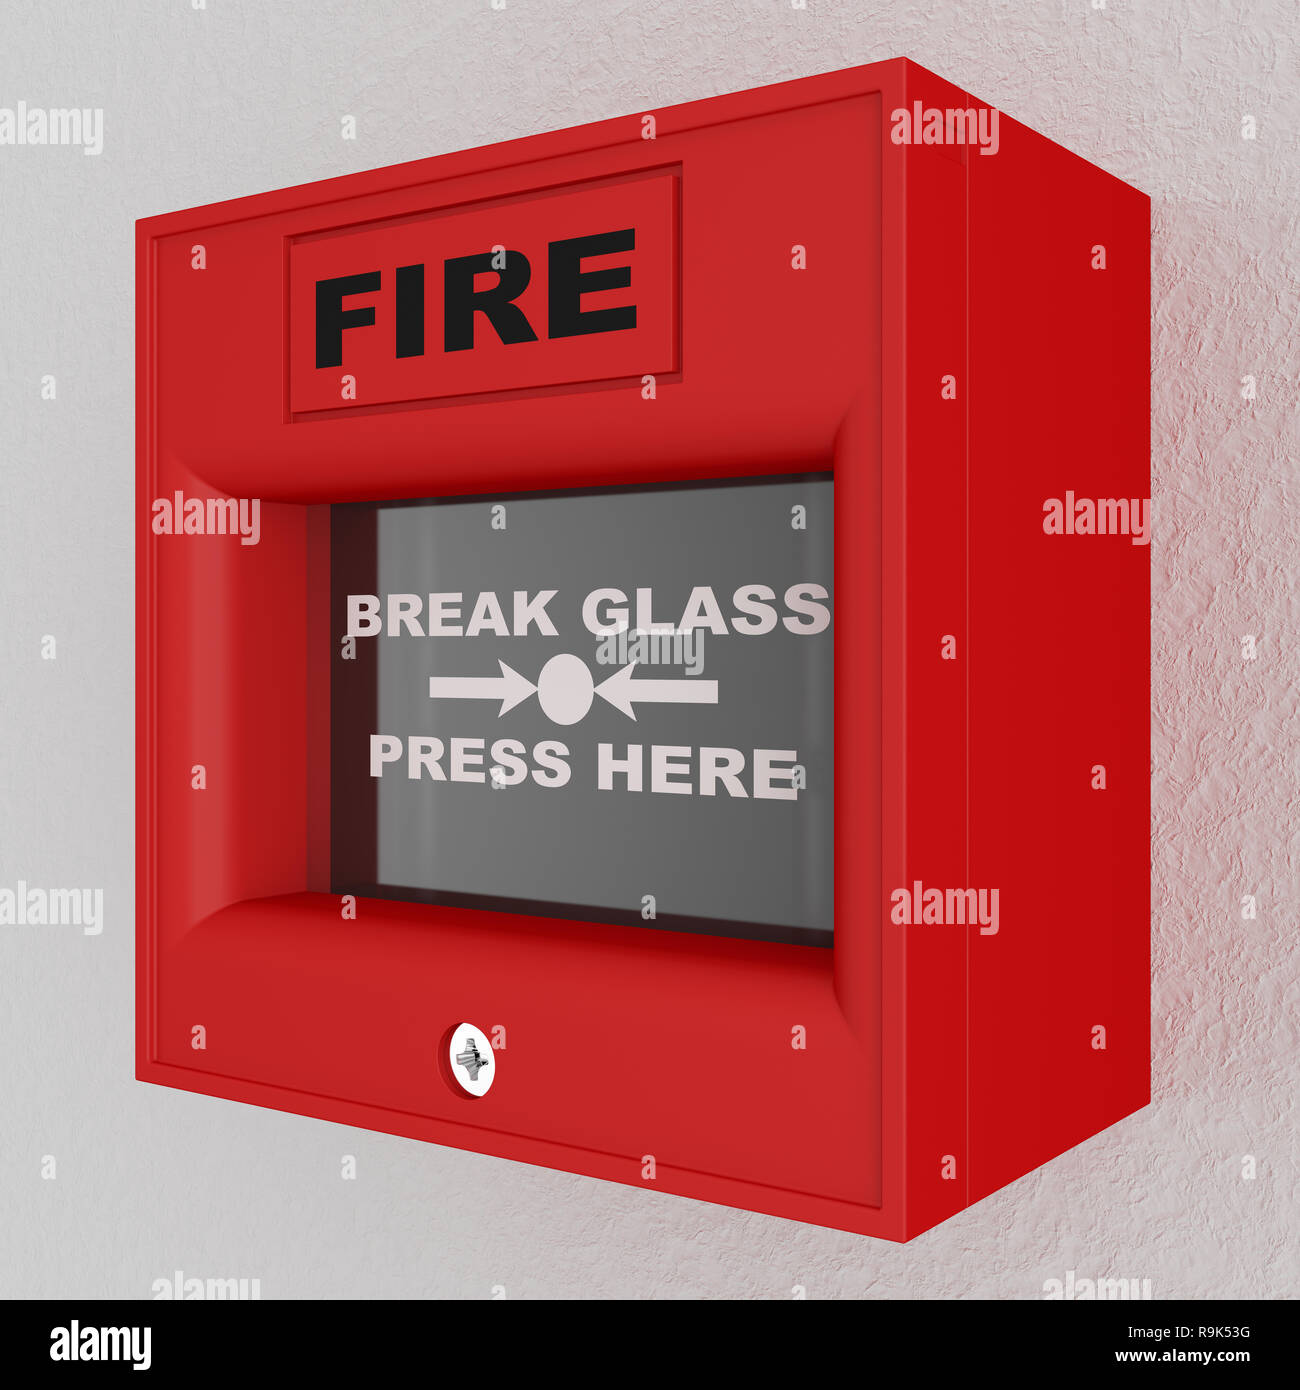 Fire box Stock Photo